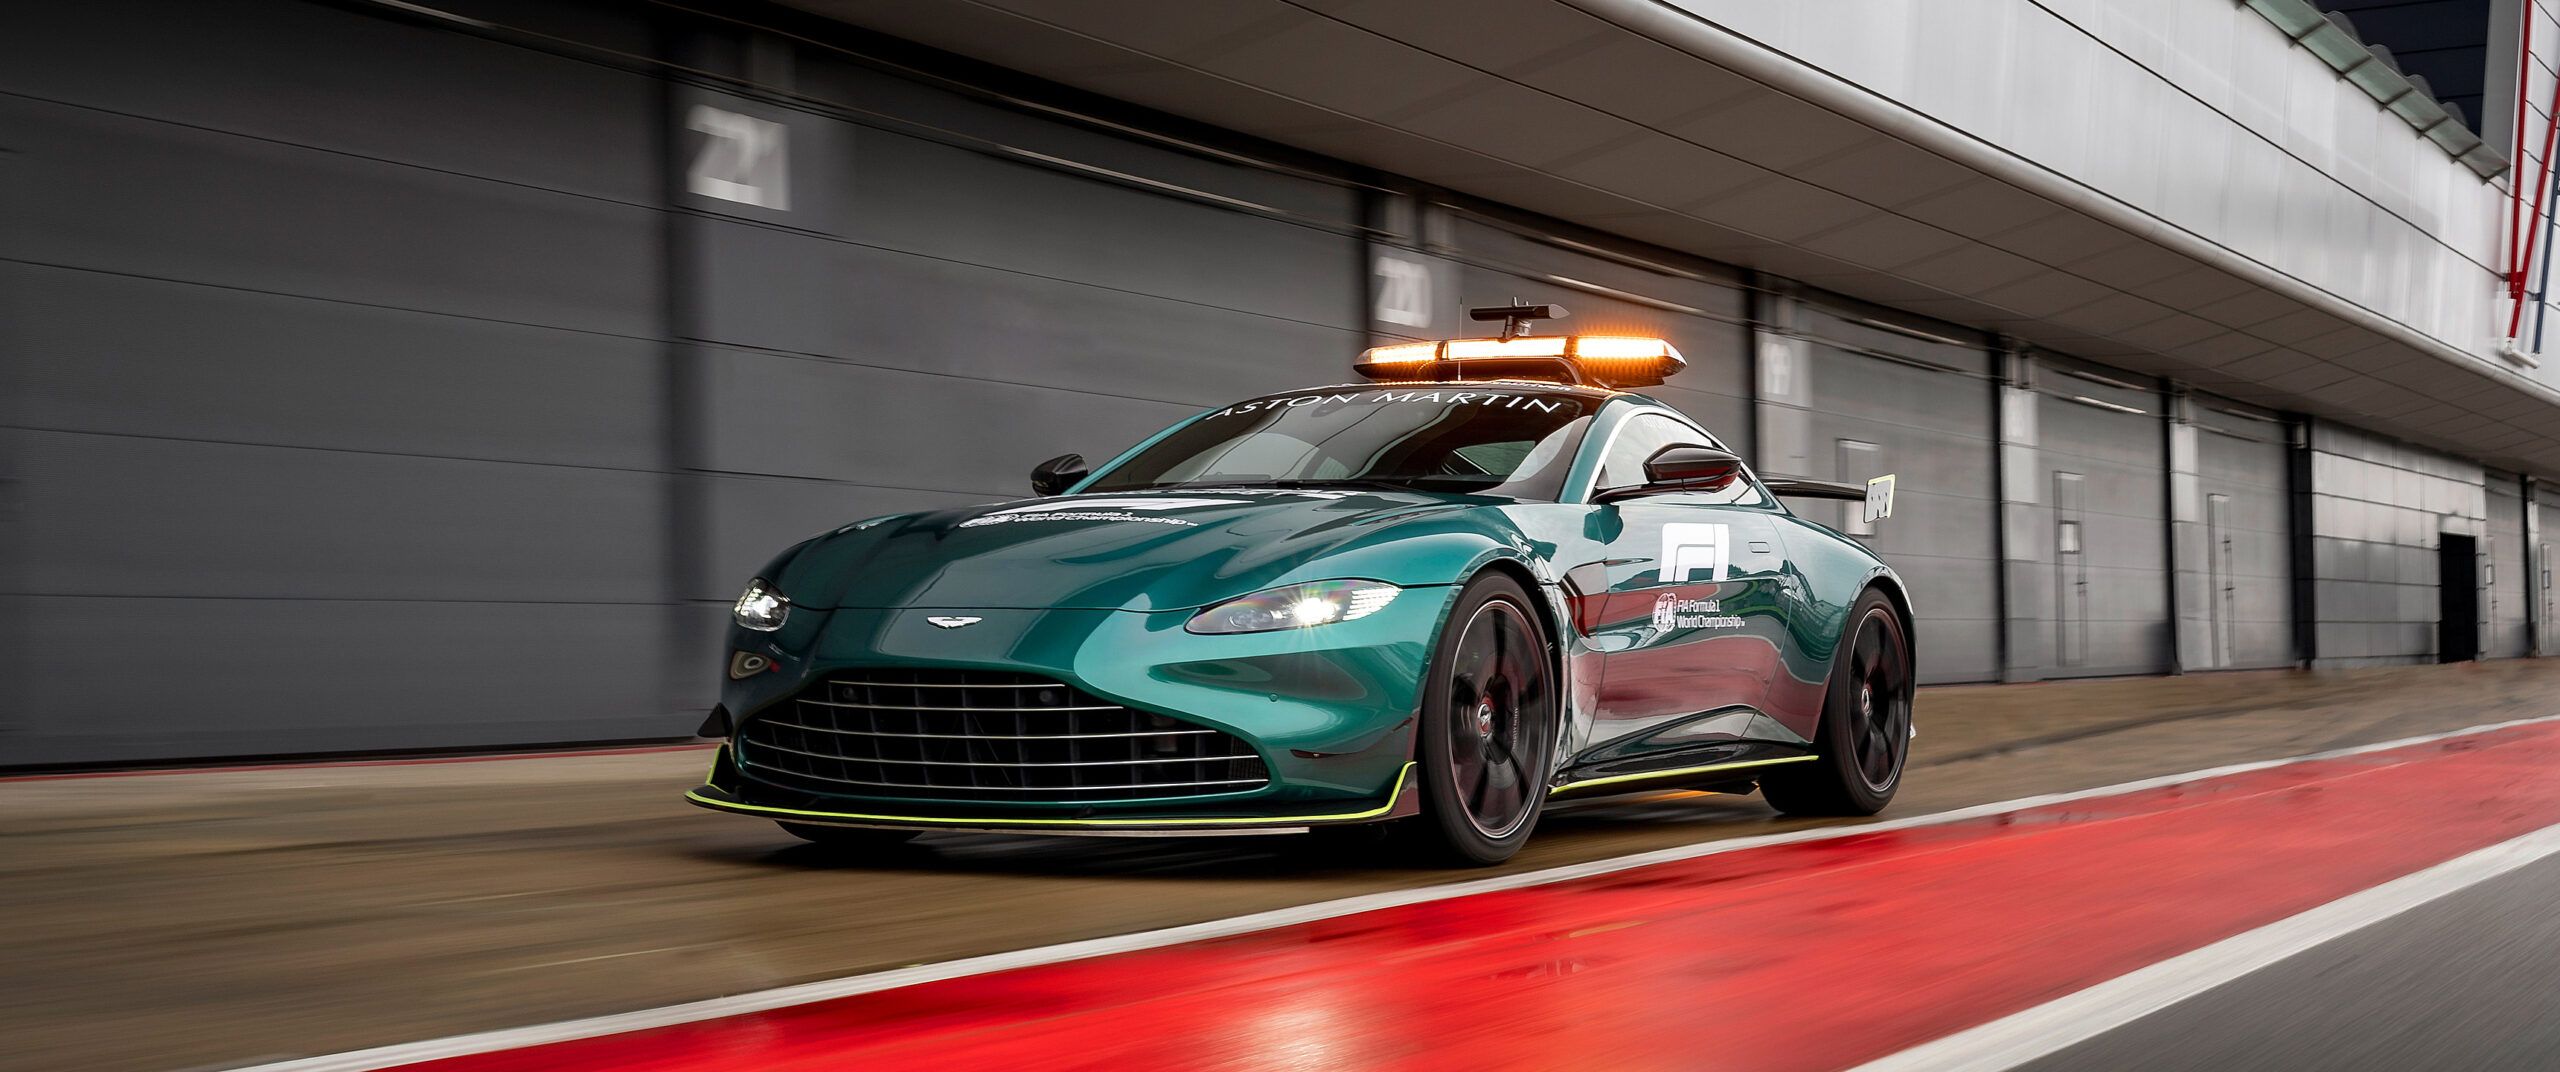 Aston Martin Vantage F1 Safety Car Wallpaper